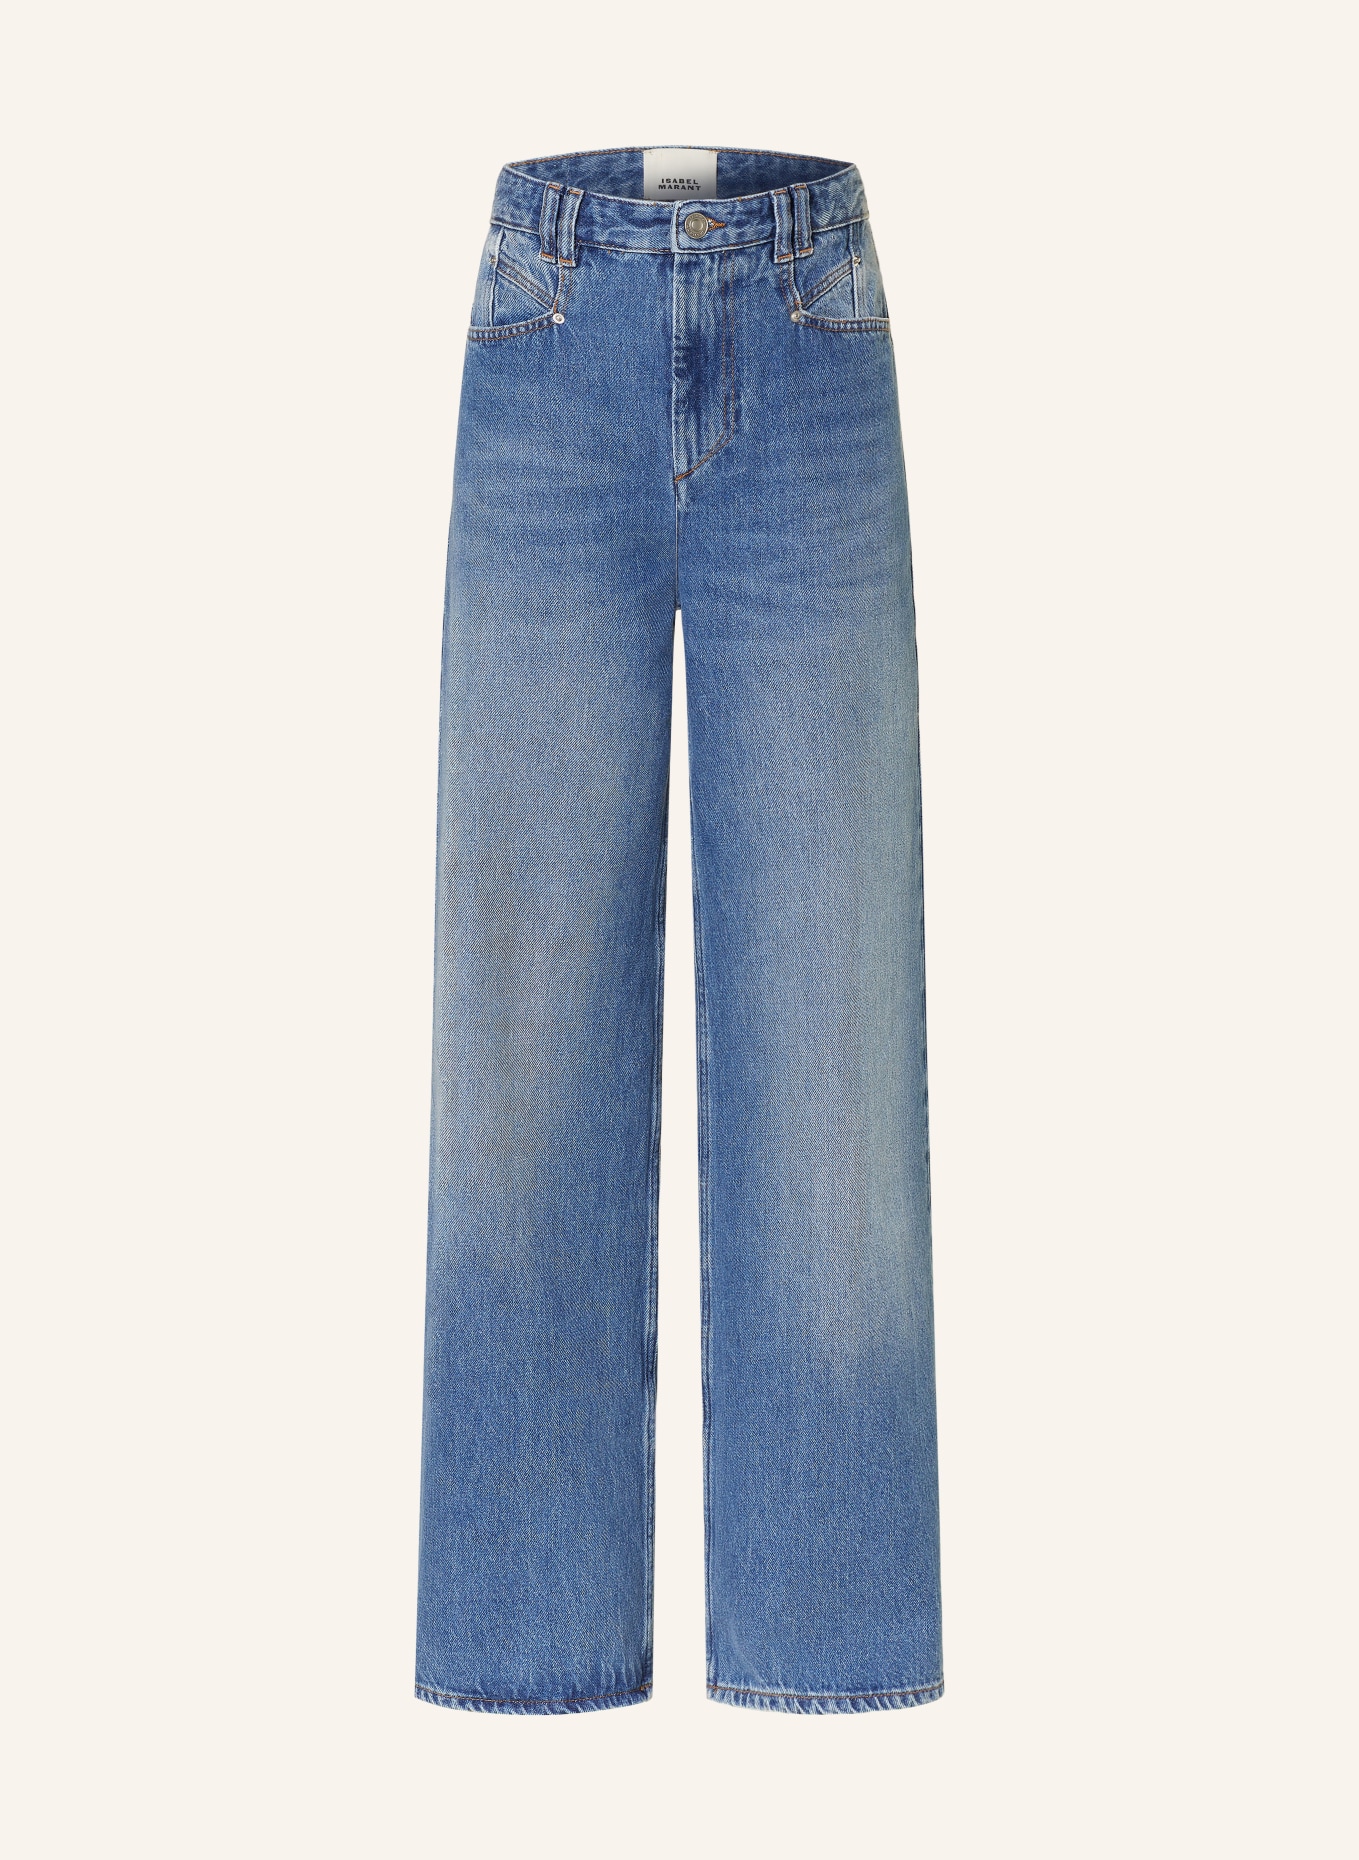 MARANT ÉTOILE Straight Jeans LEMONY, Farbe: 30BU blue (Bild 1)